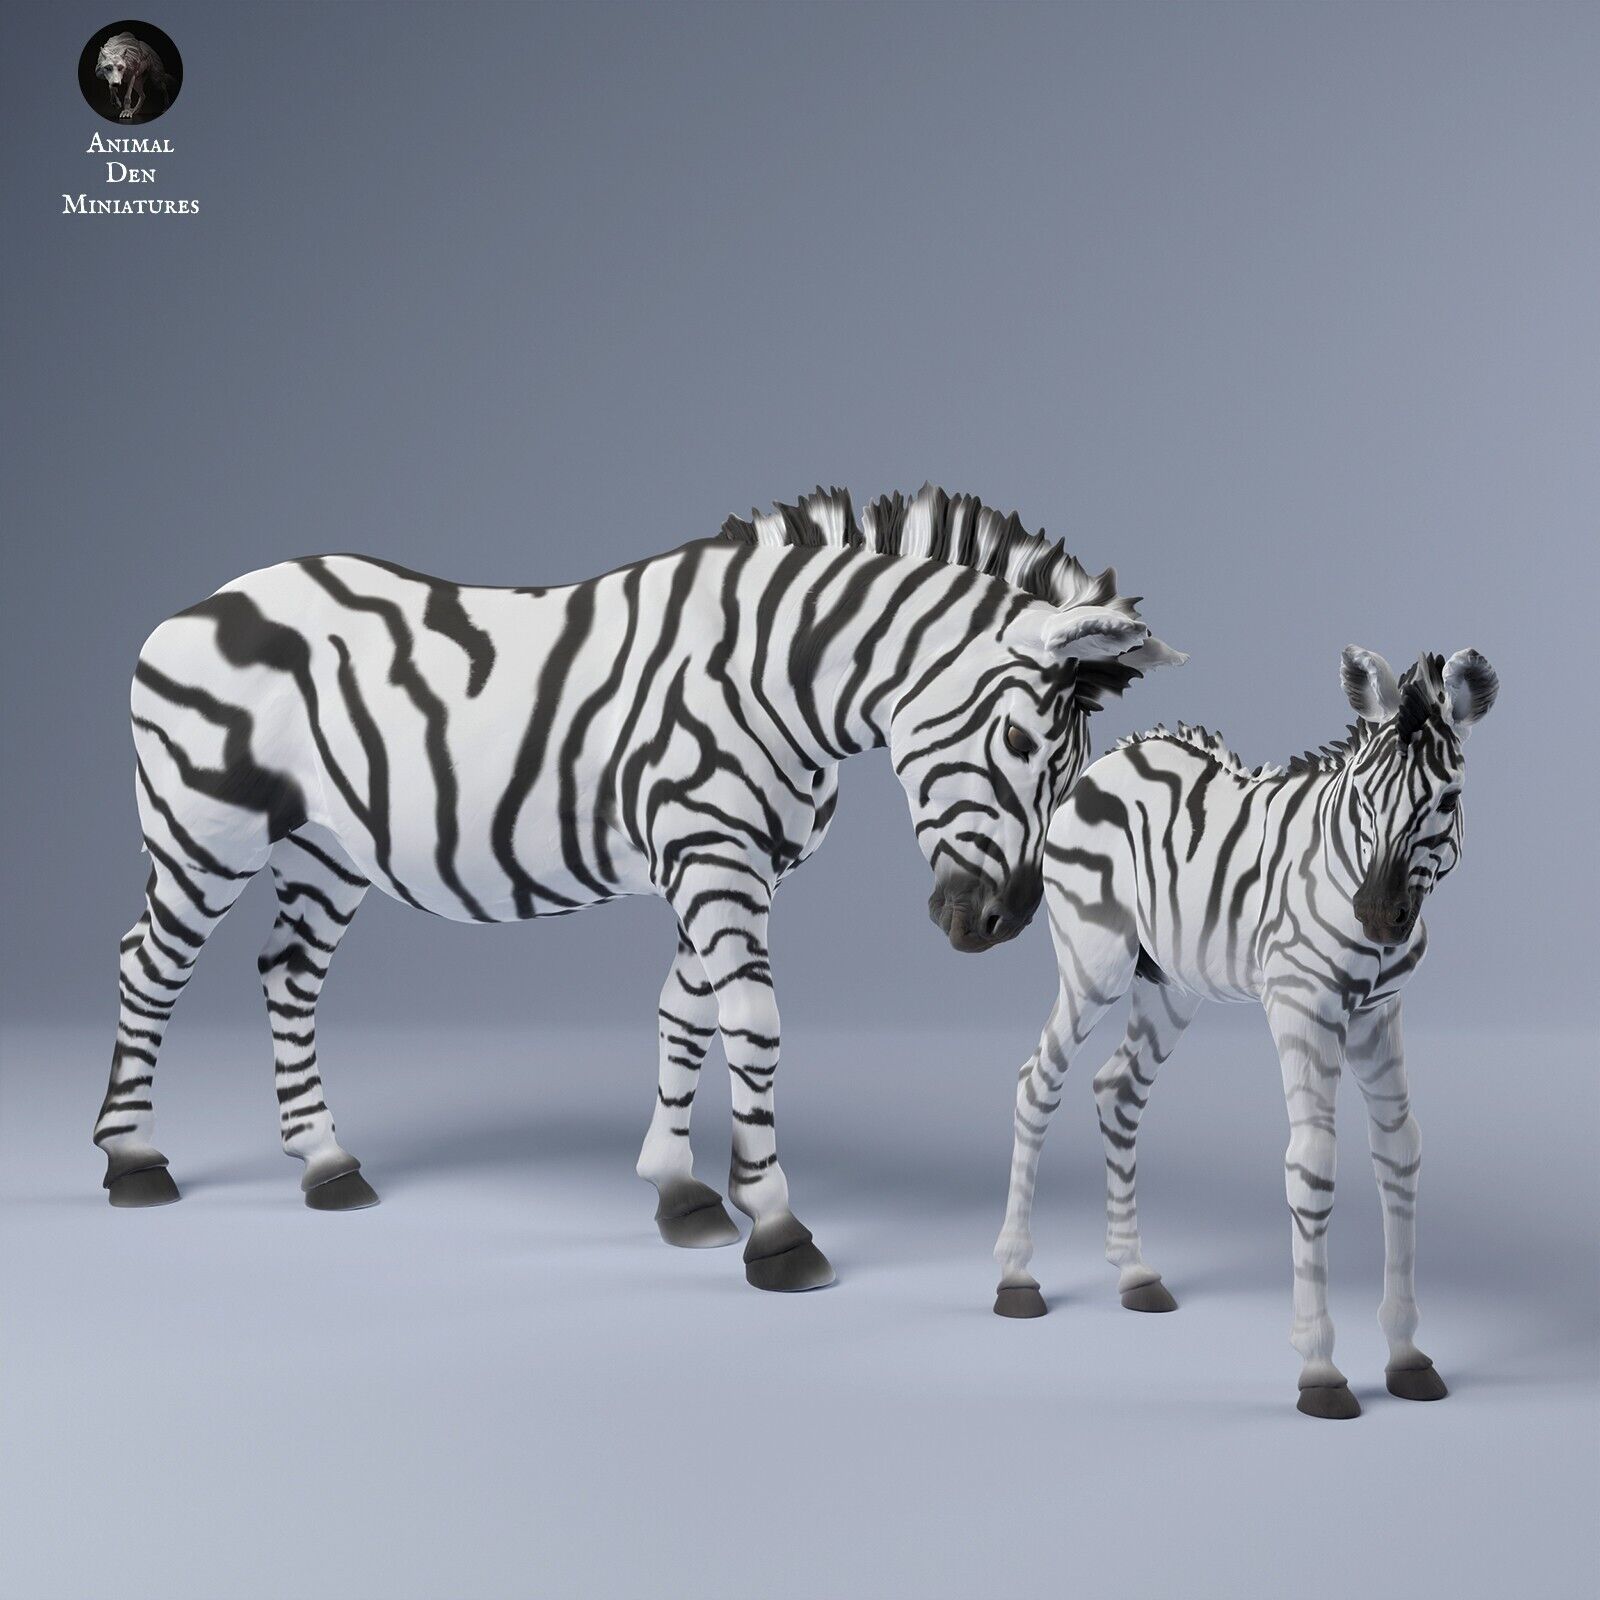 Breyer size 1/12 classic resin model zebra and calf horse figurines